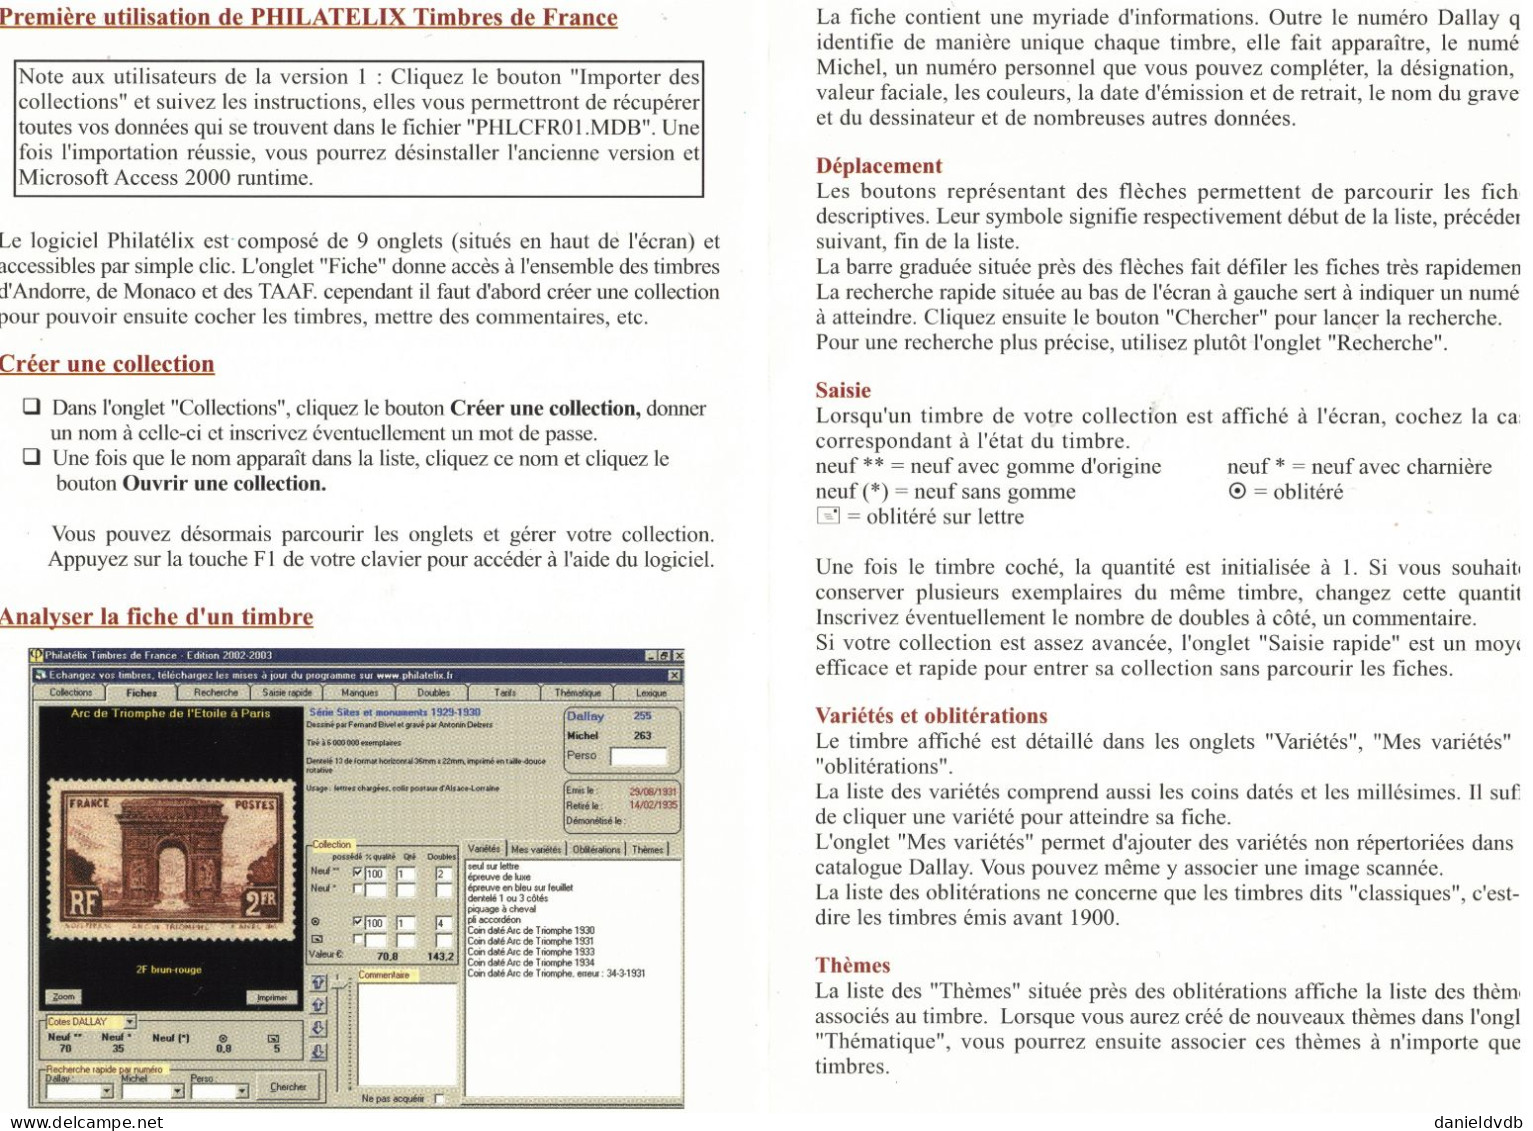 Timbres De FRANCE 1849 - 2001 Philatelix édition Dallay 2002-2003 1 CD-ROM - Frans